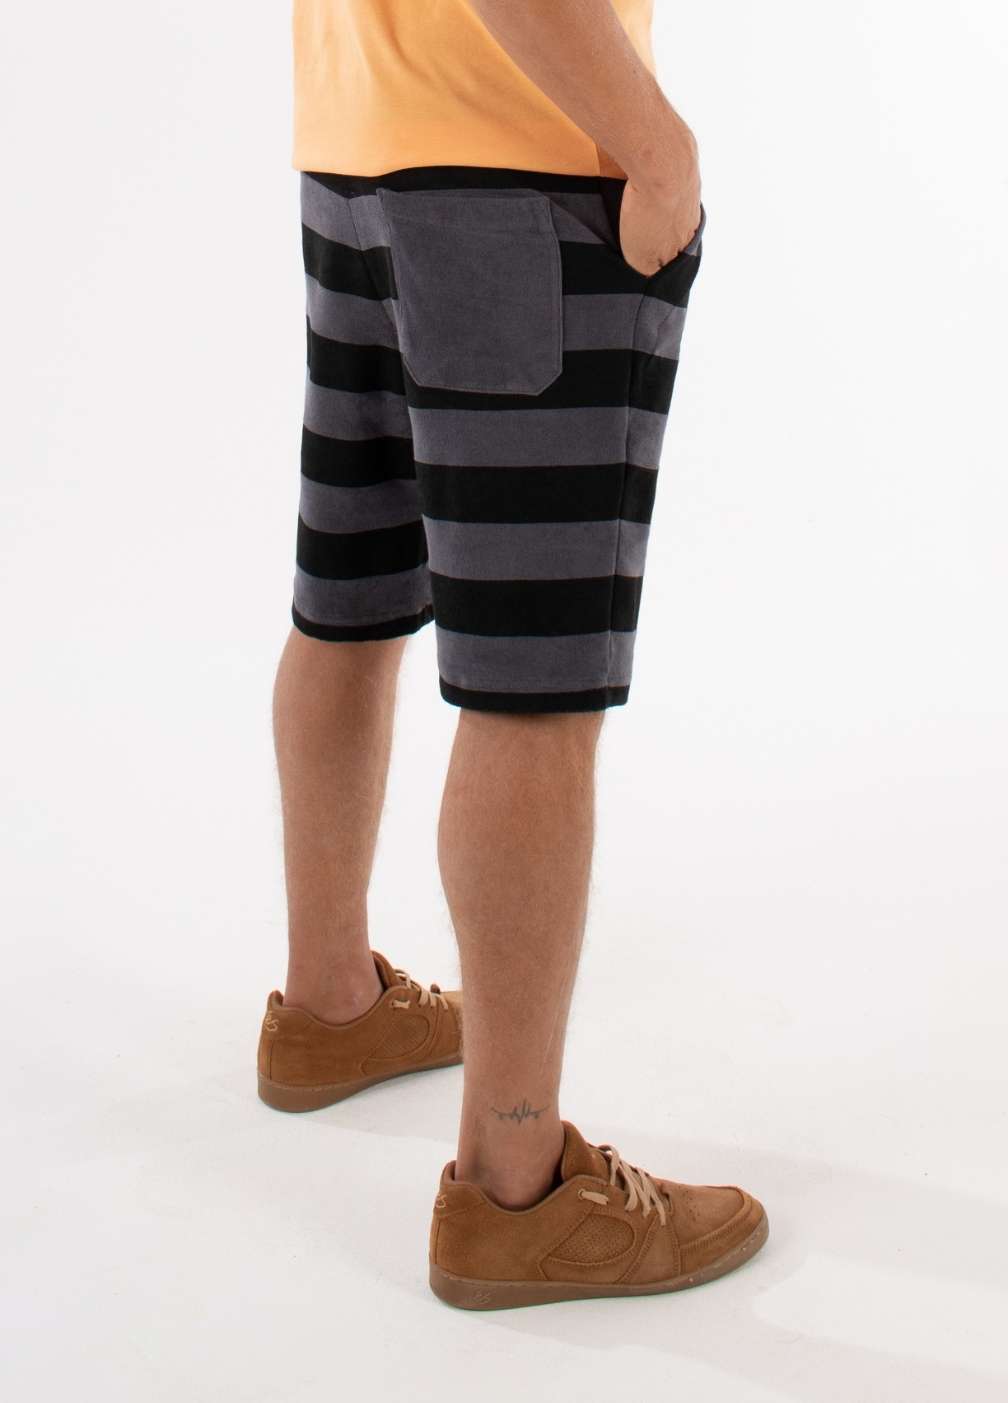 nuffinz striped shorts - EBONY TOWEL SHORTS ST - 100% organic cotton - terry cloth - comfortable shorts for men - closeup back